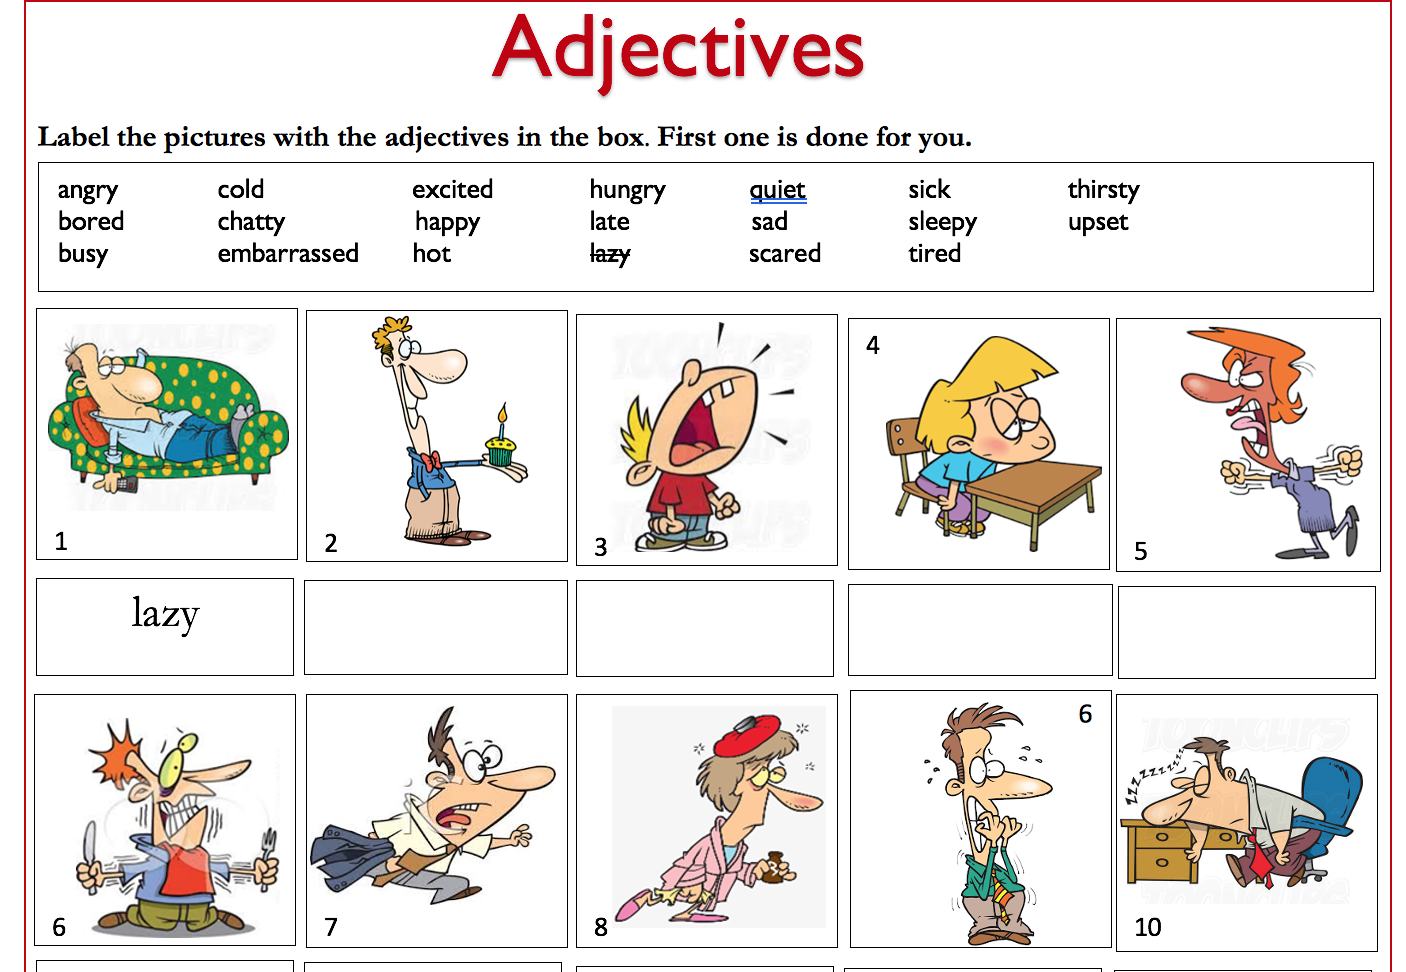 worksheets-possessive-adjectives-possessives-forgot-my-password-school-subjects-online